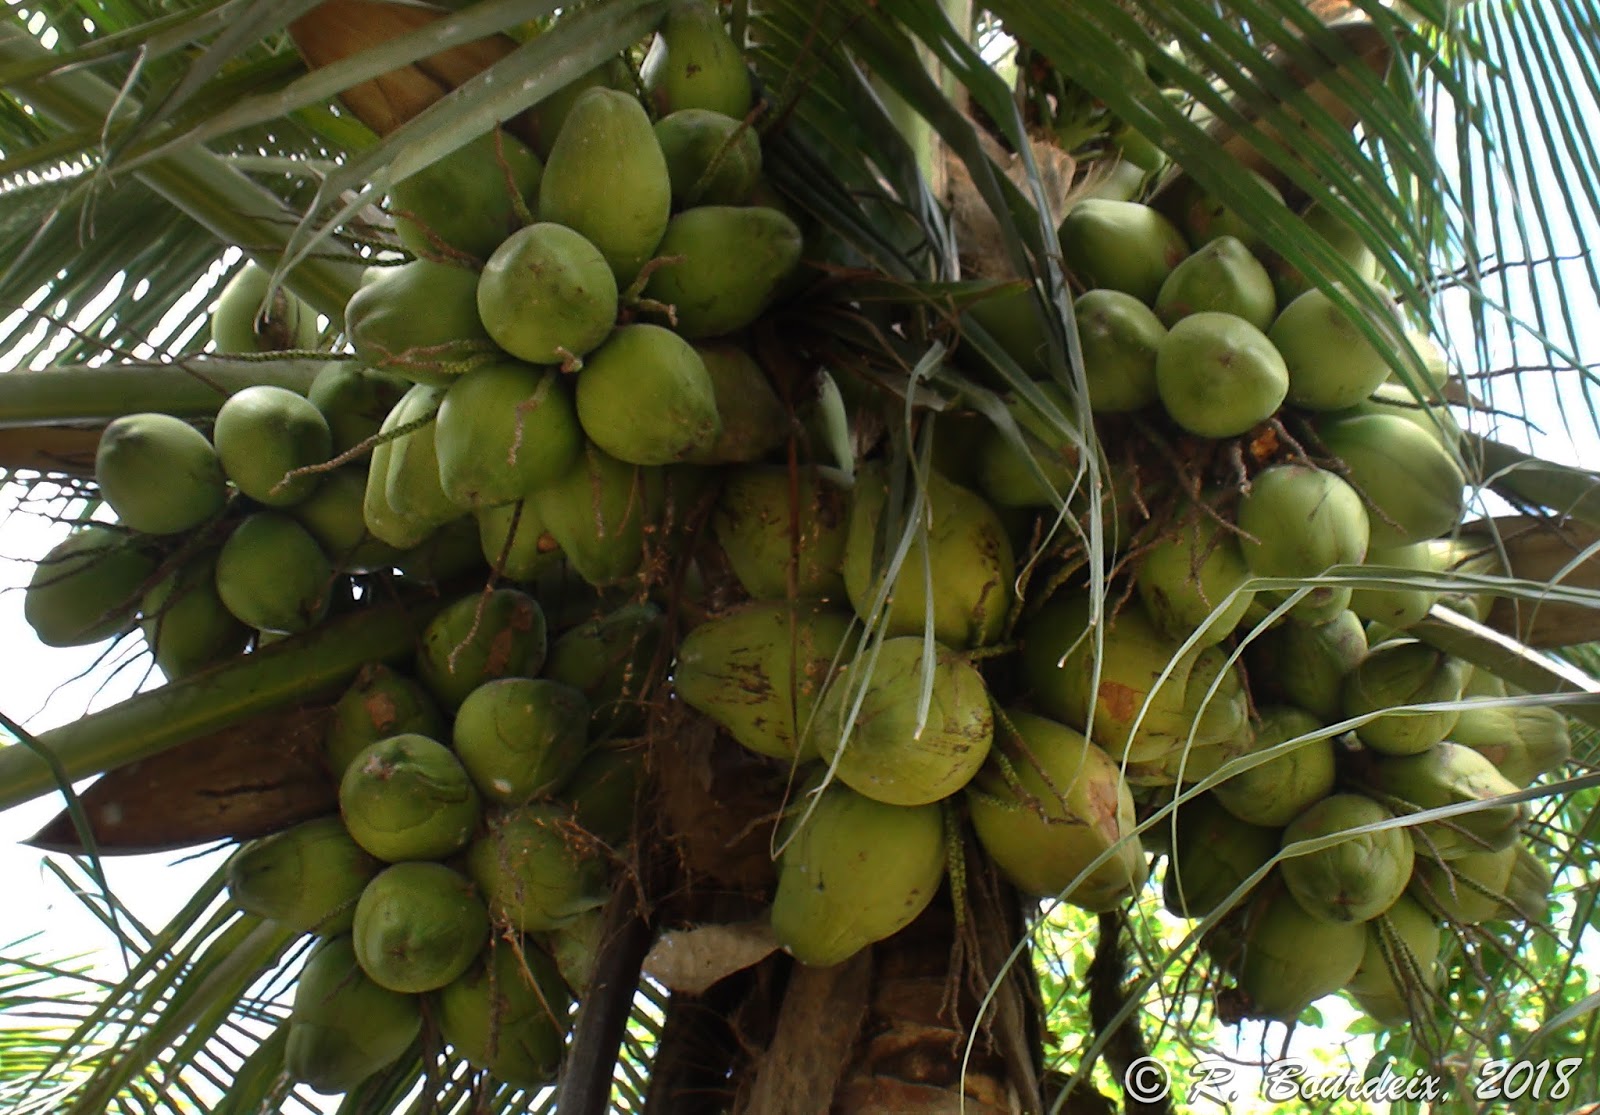 Coconut planting material for the Pacific region: The Kiribati Green Dwarf